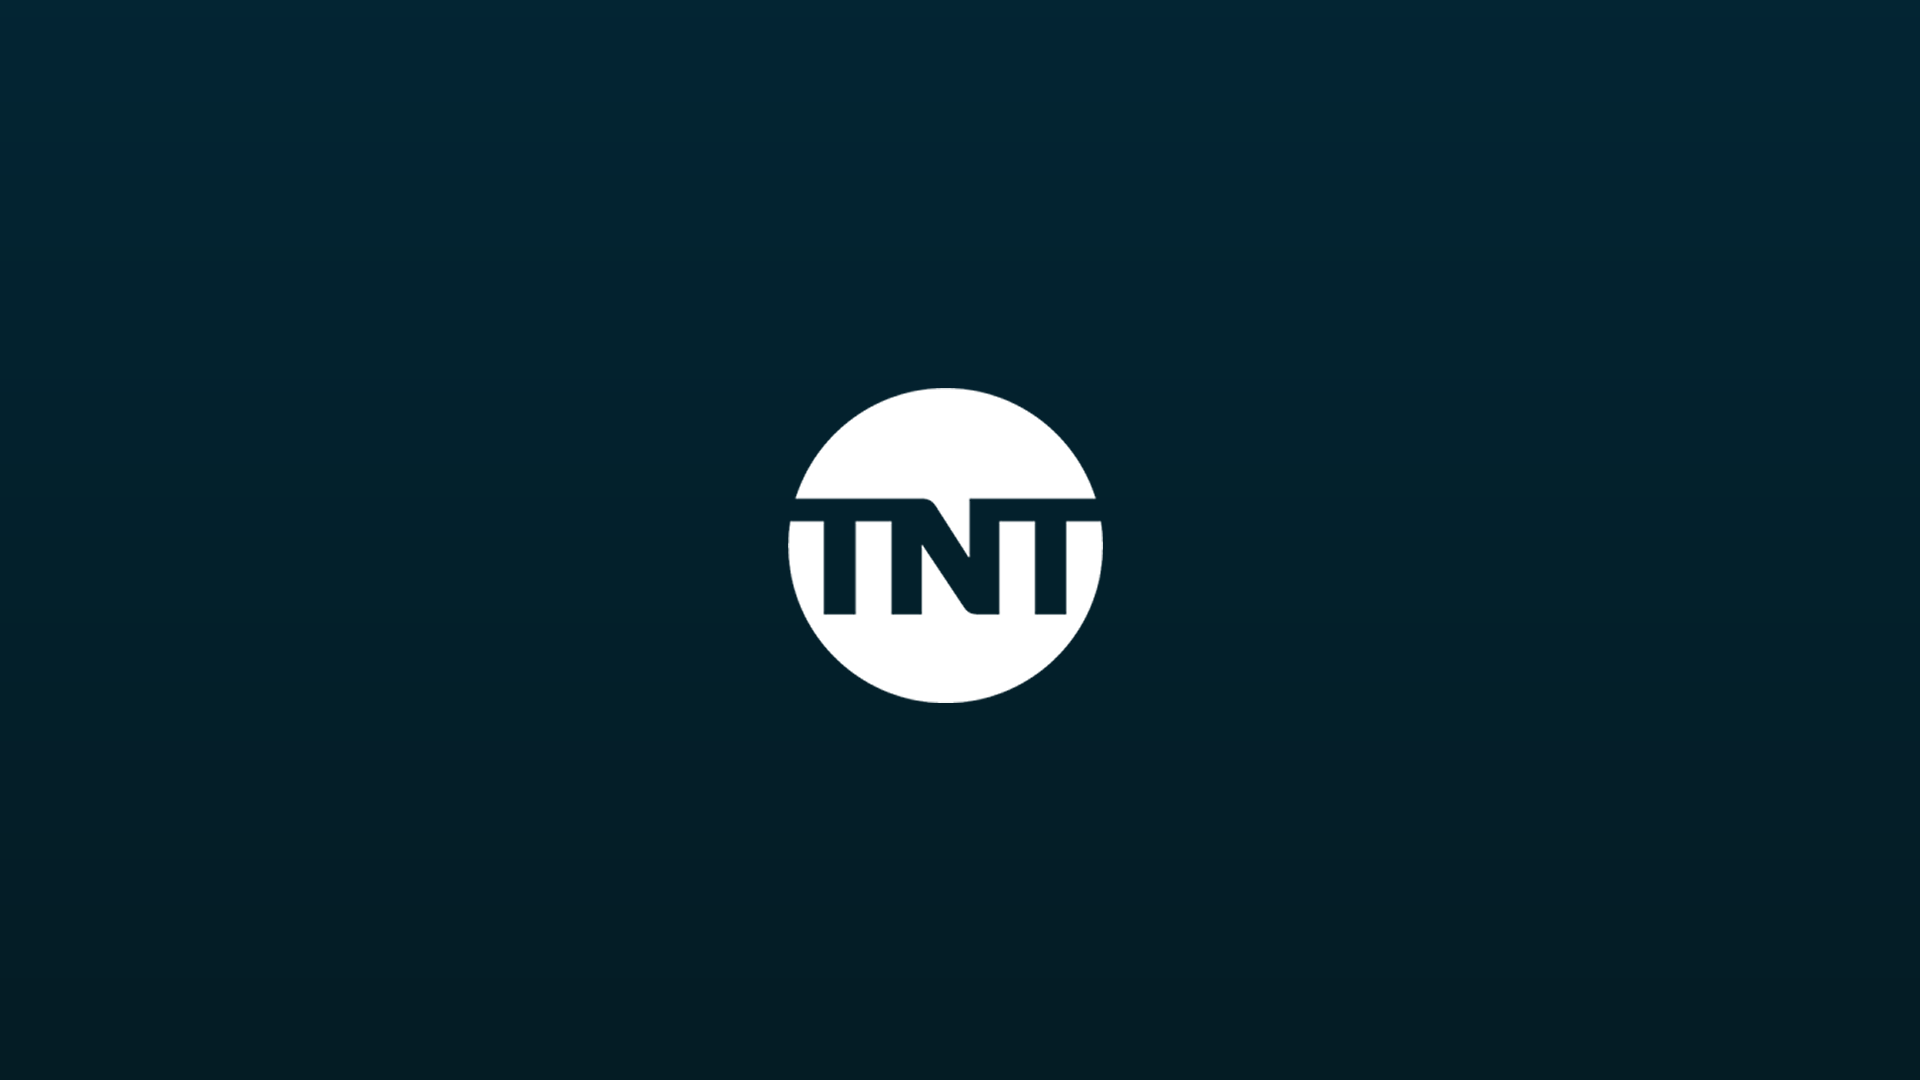 TNT Ao Vivo Online